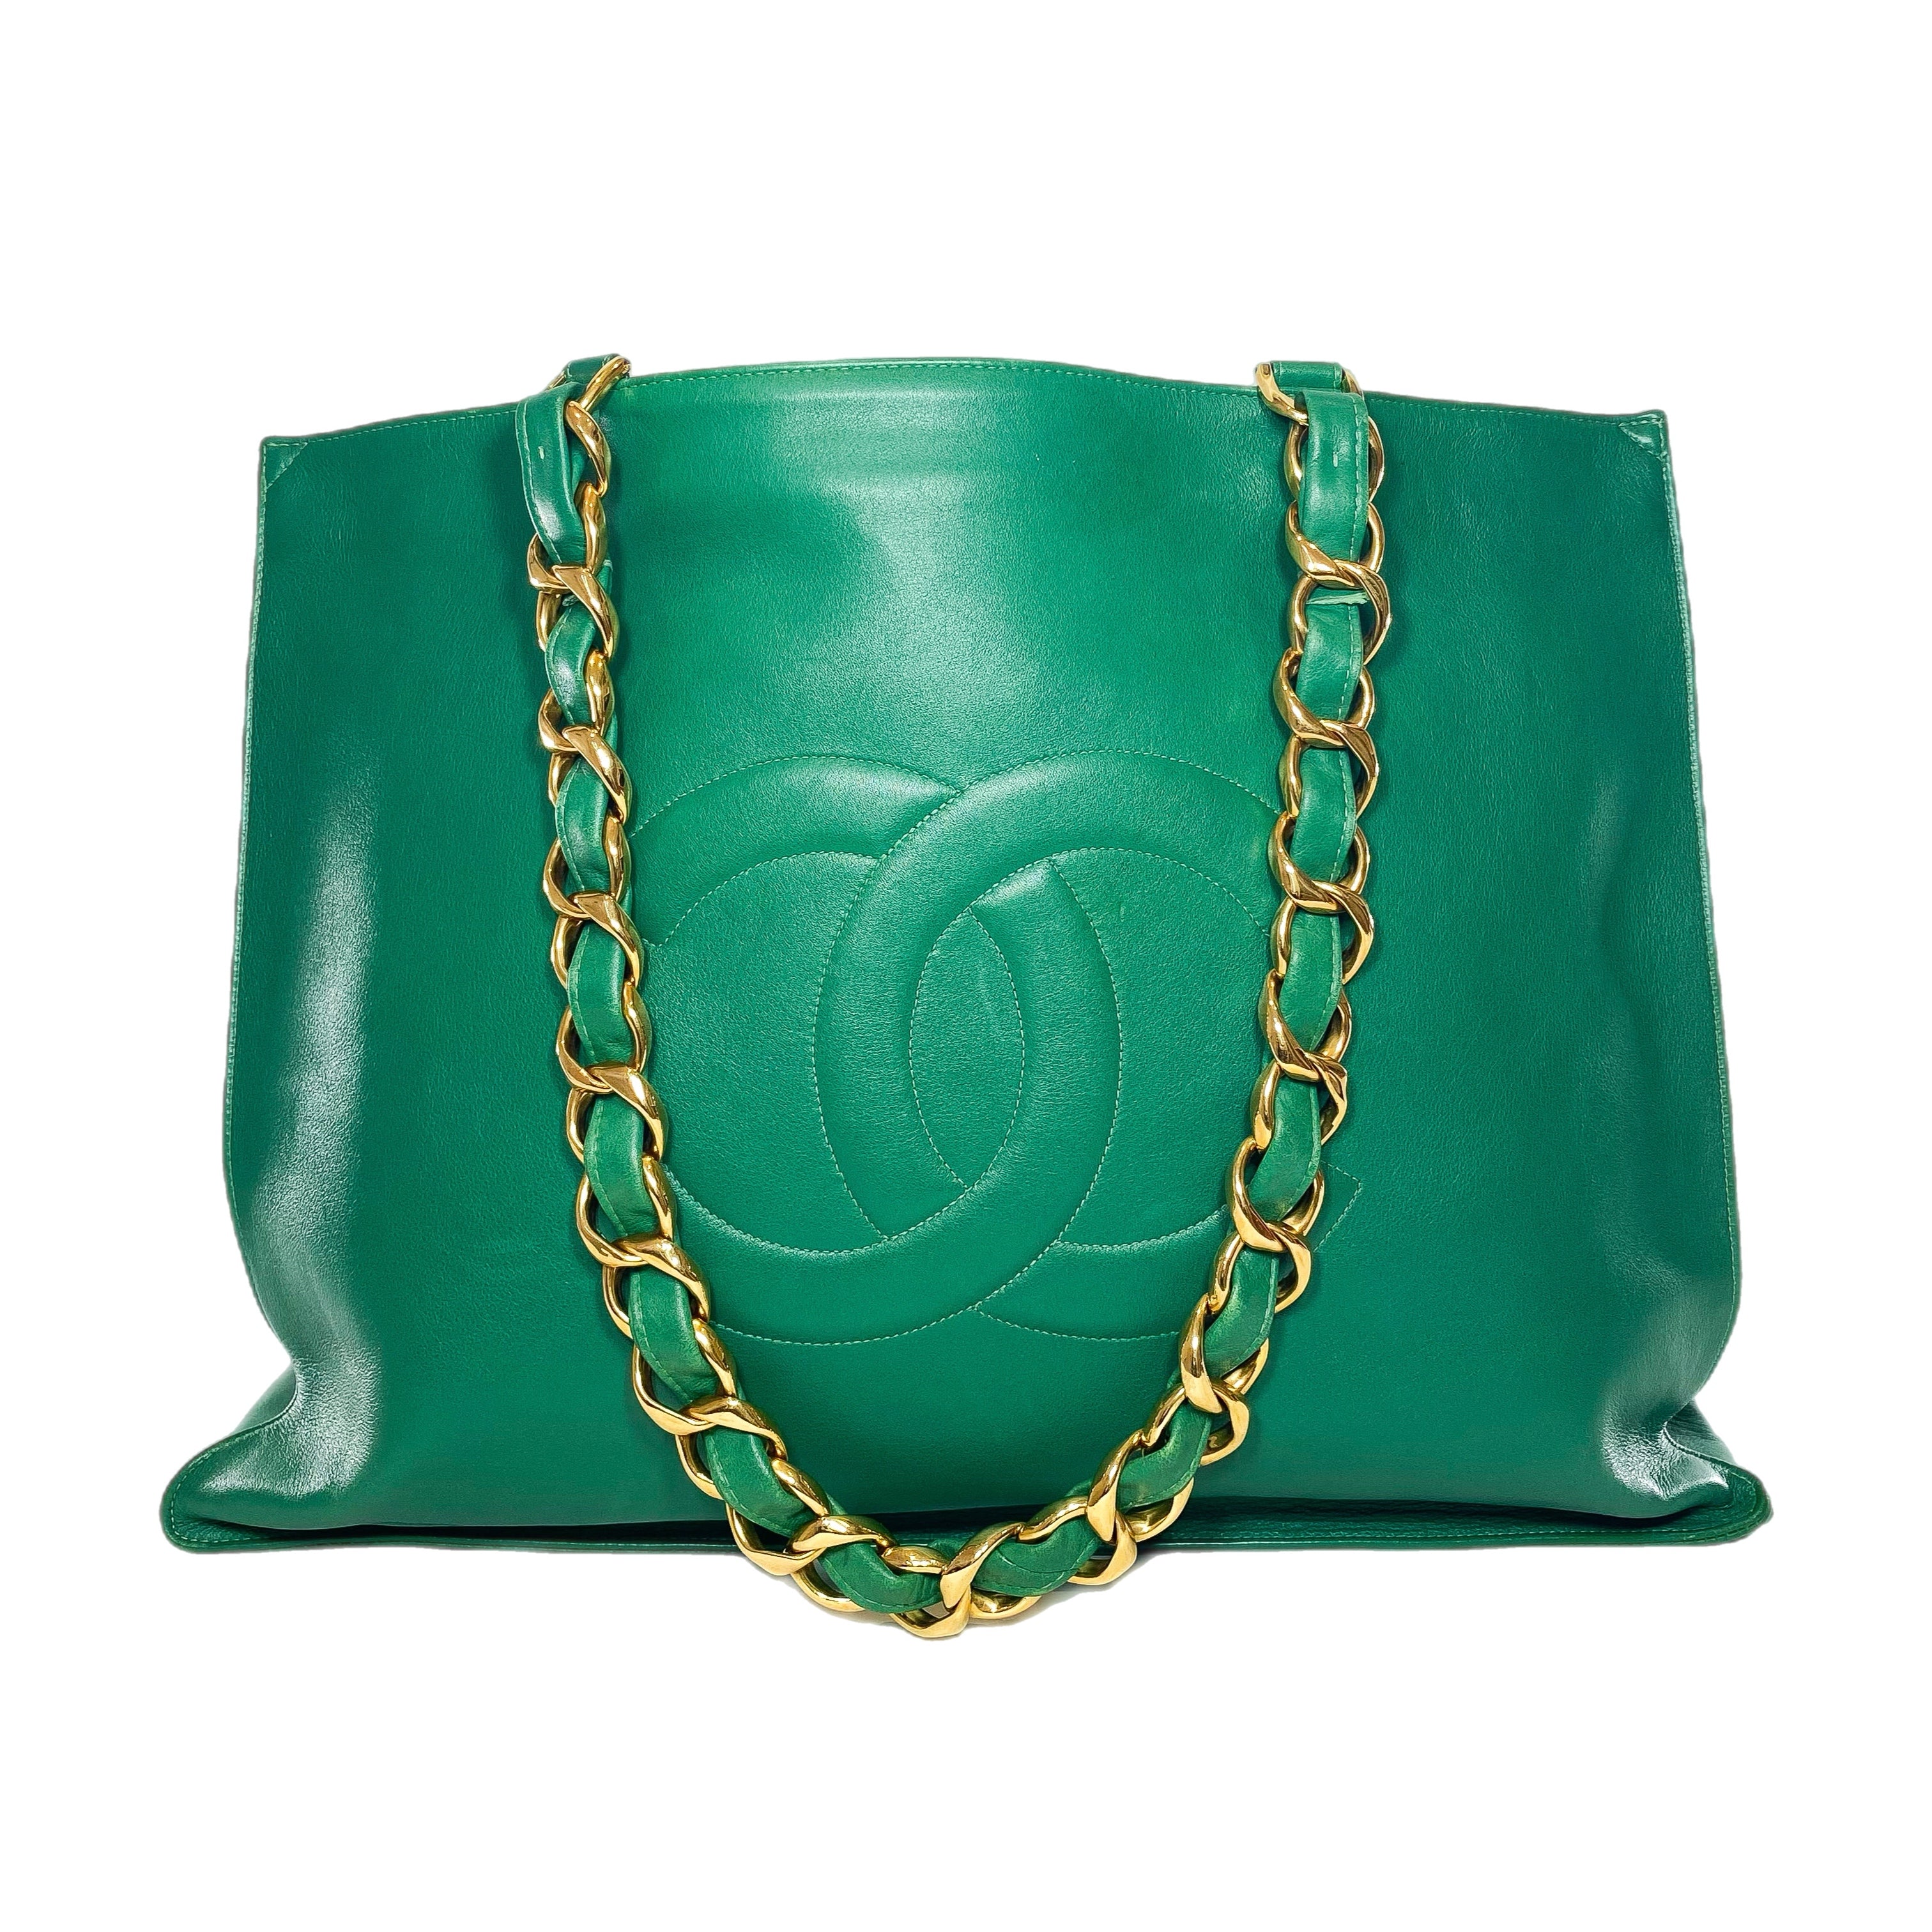 Chanel Green Jumbo XL Timeless Shopping Tote